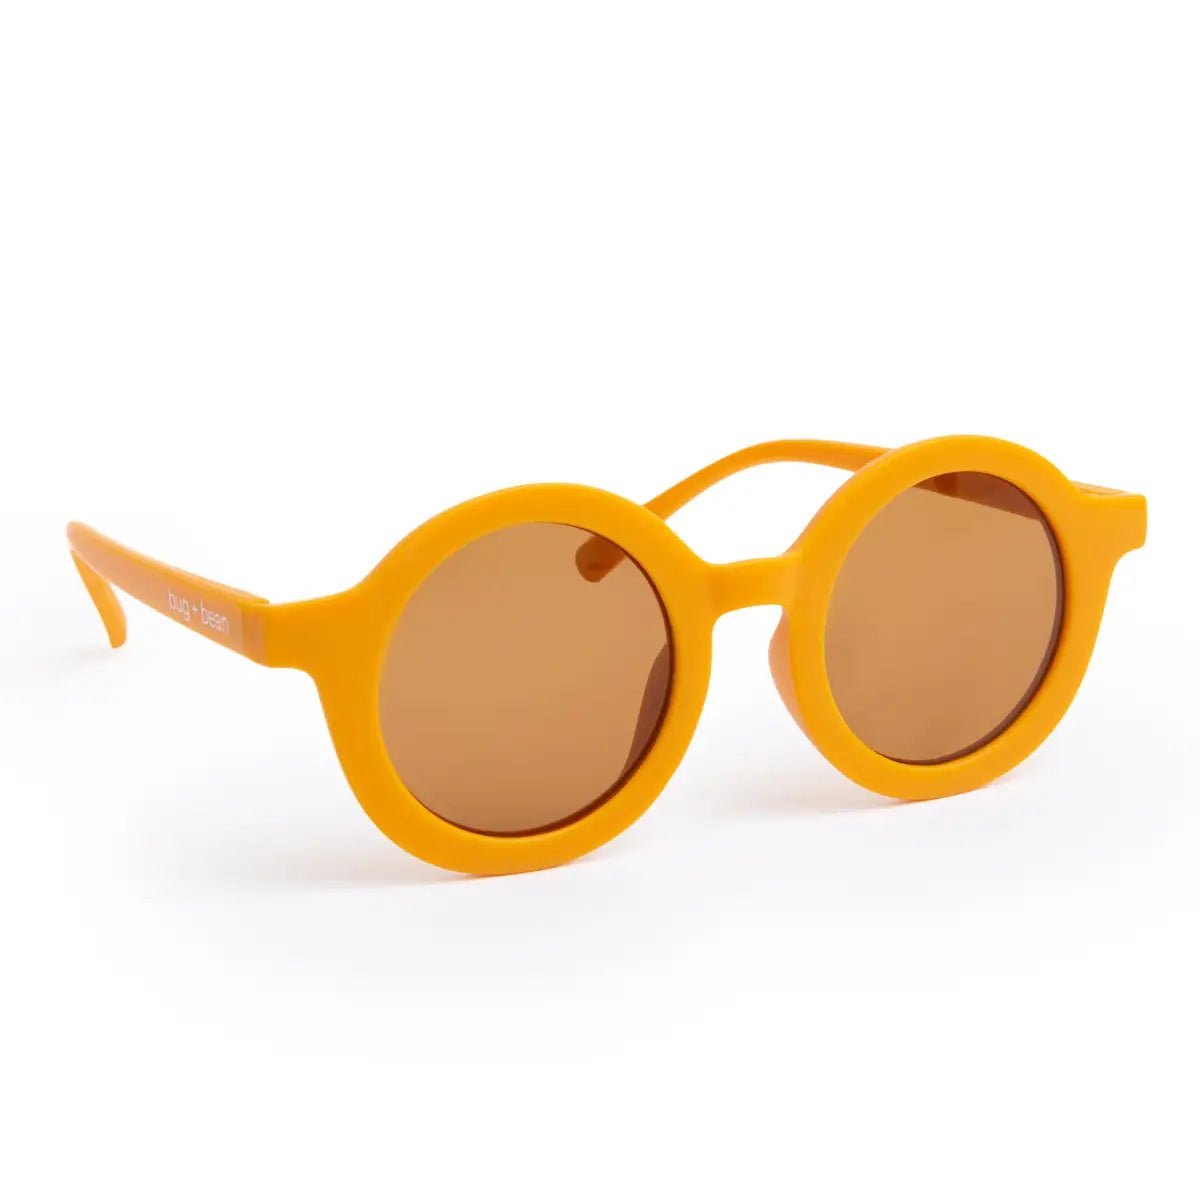 Recycled Plastic Sunglasses - Mustard